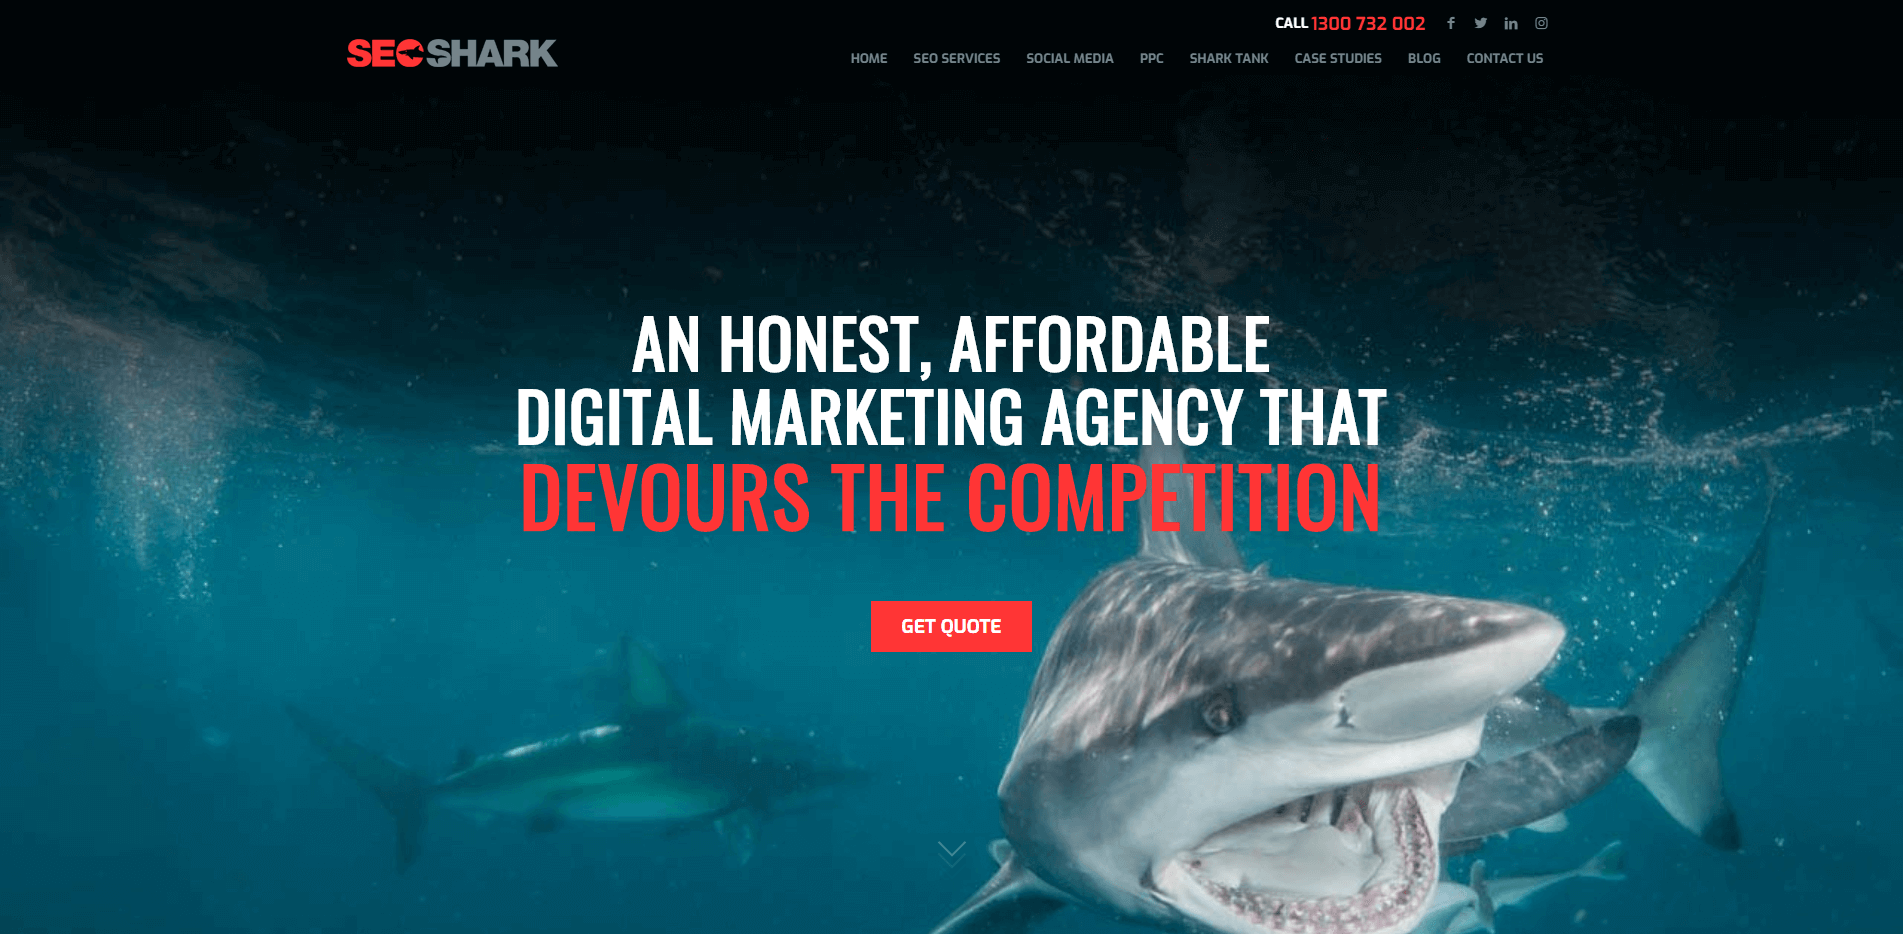 Home page of SEO shark – a Digital Marketing Agency